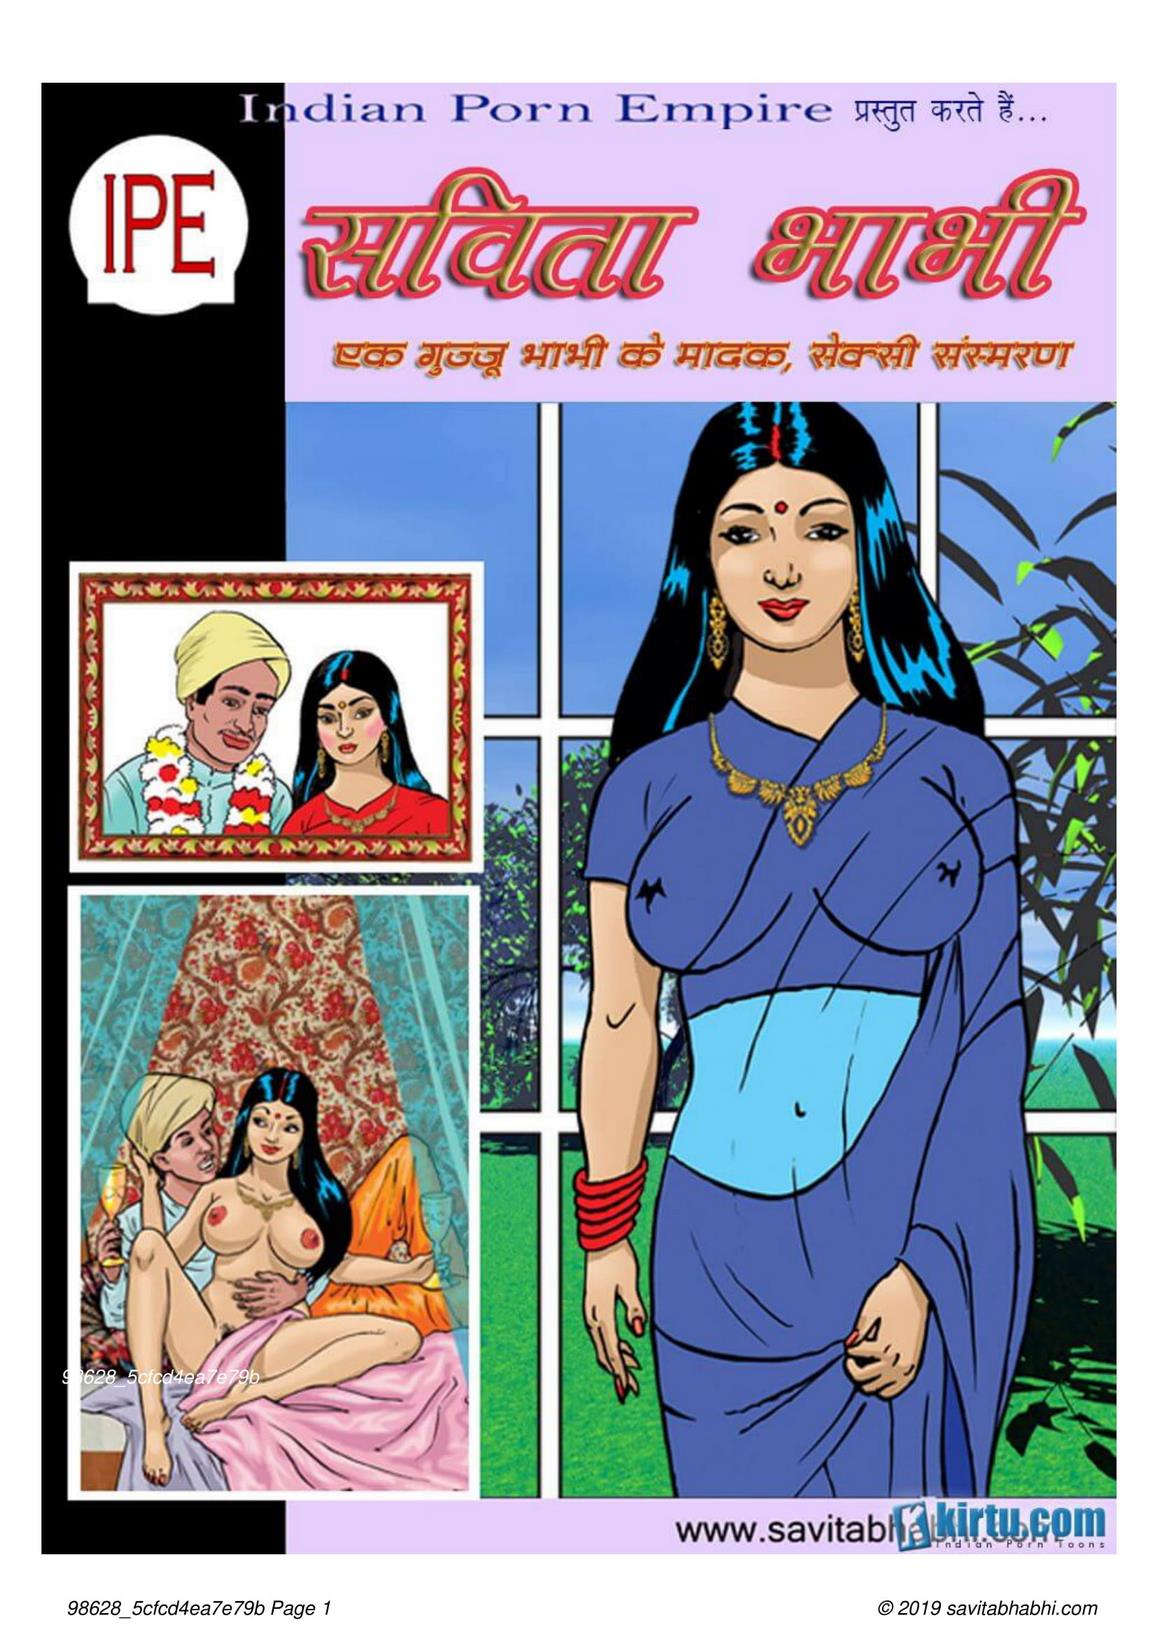 Savita Bhabhi Episode 01 Hindi - Bra Bechne Aaya (ब्रा बेचने आया) - 43 - FSIComics